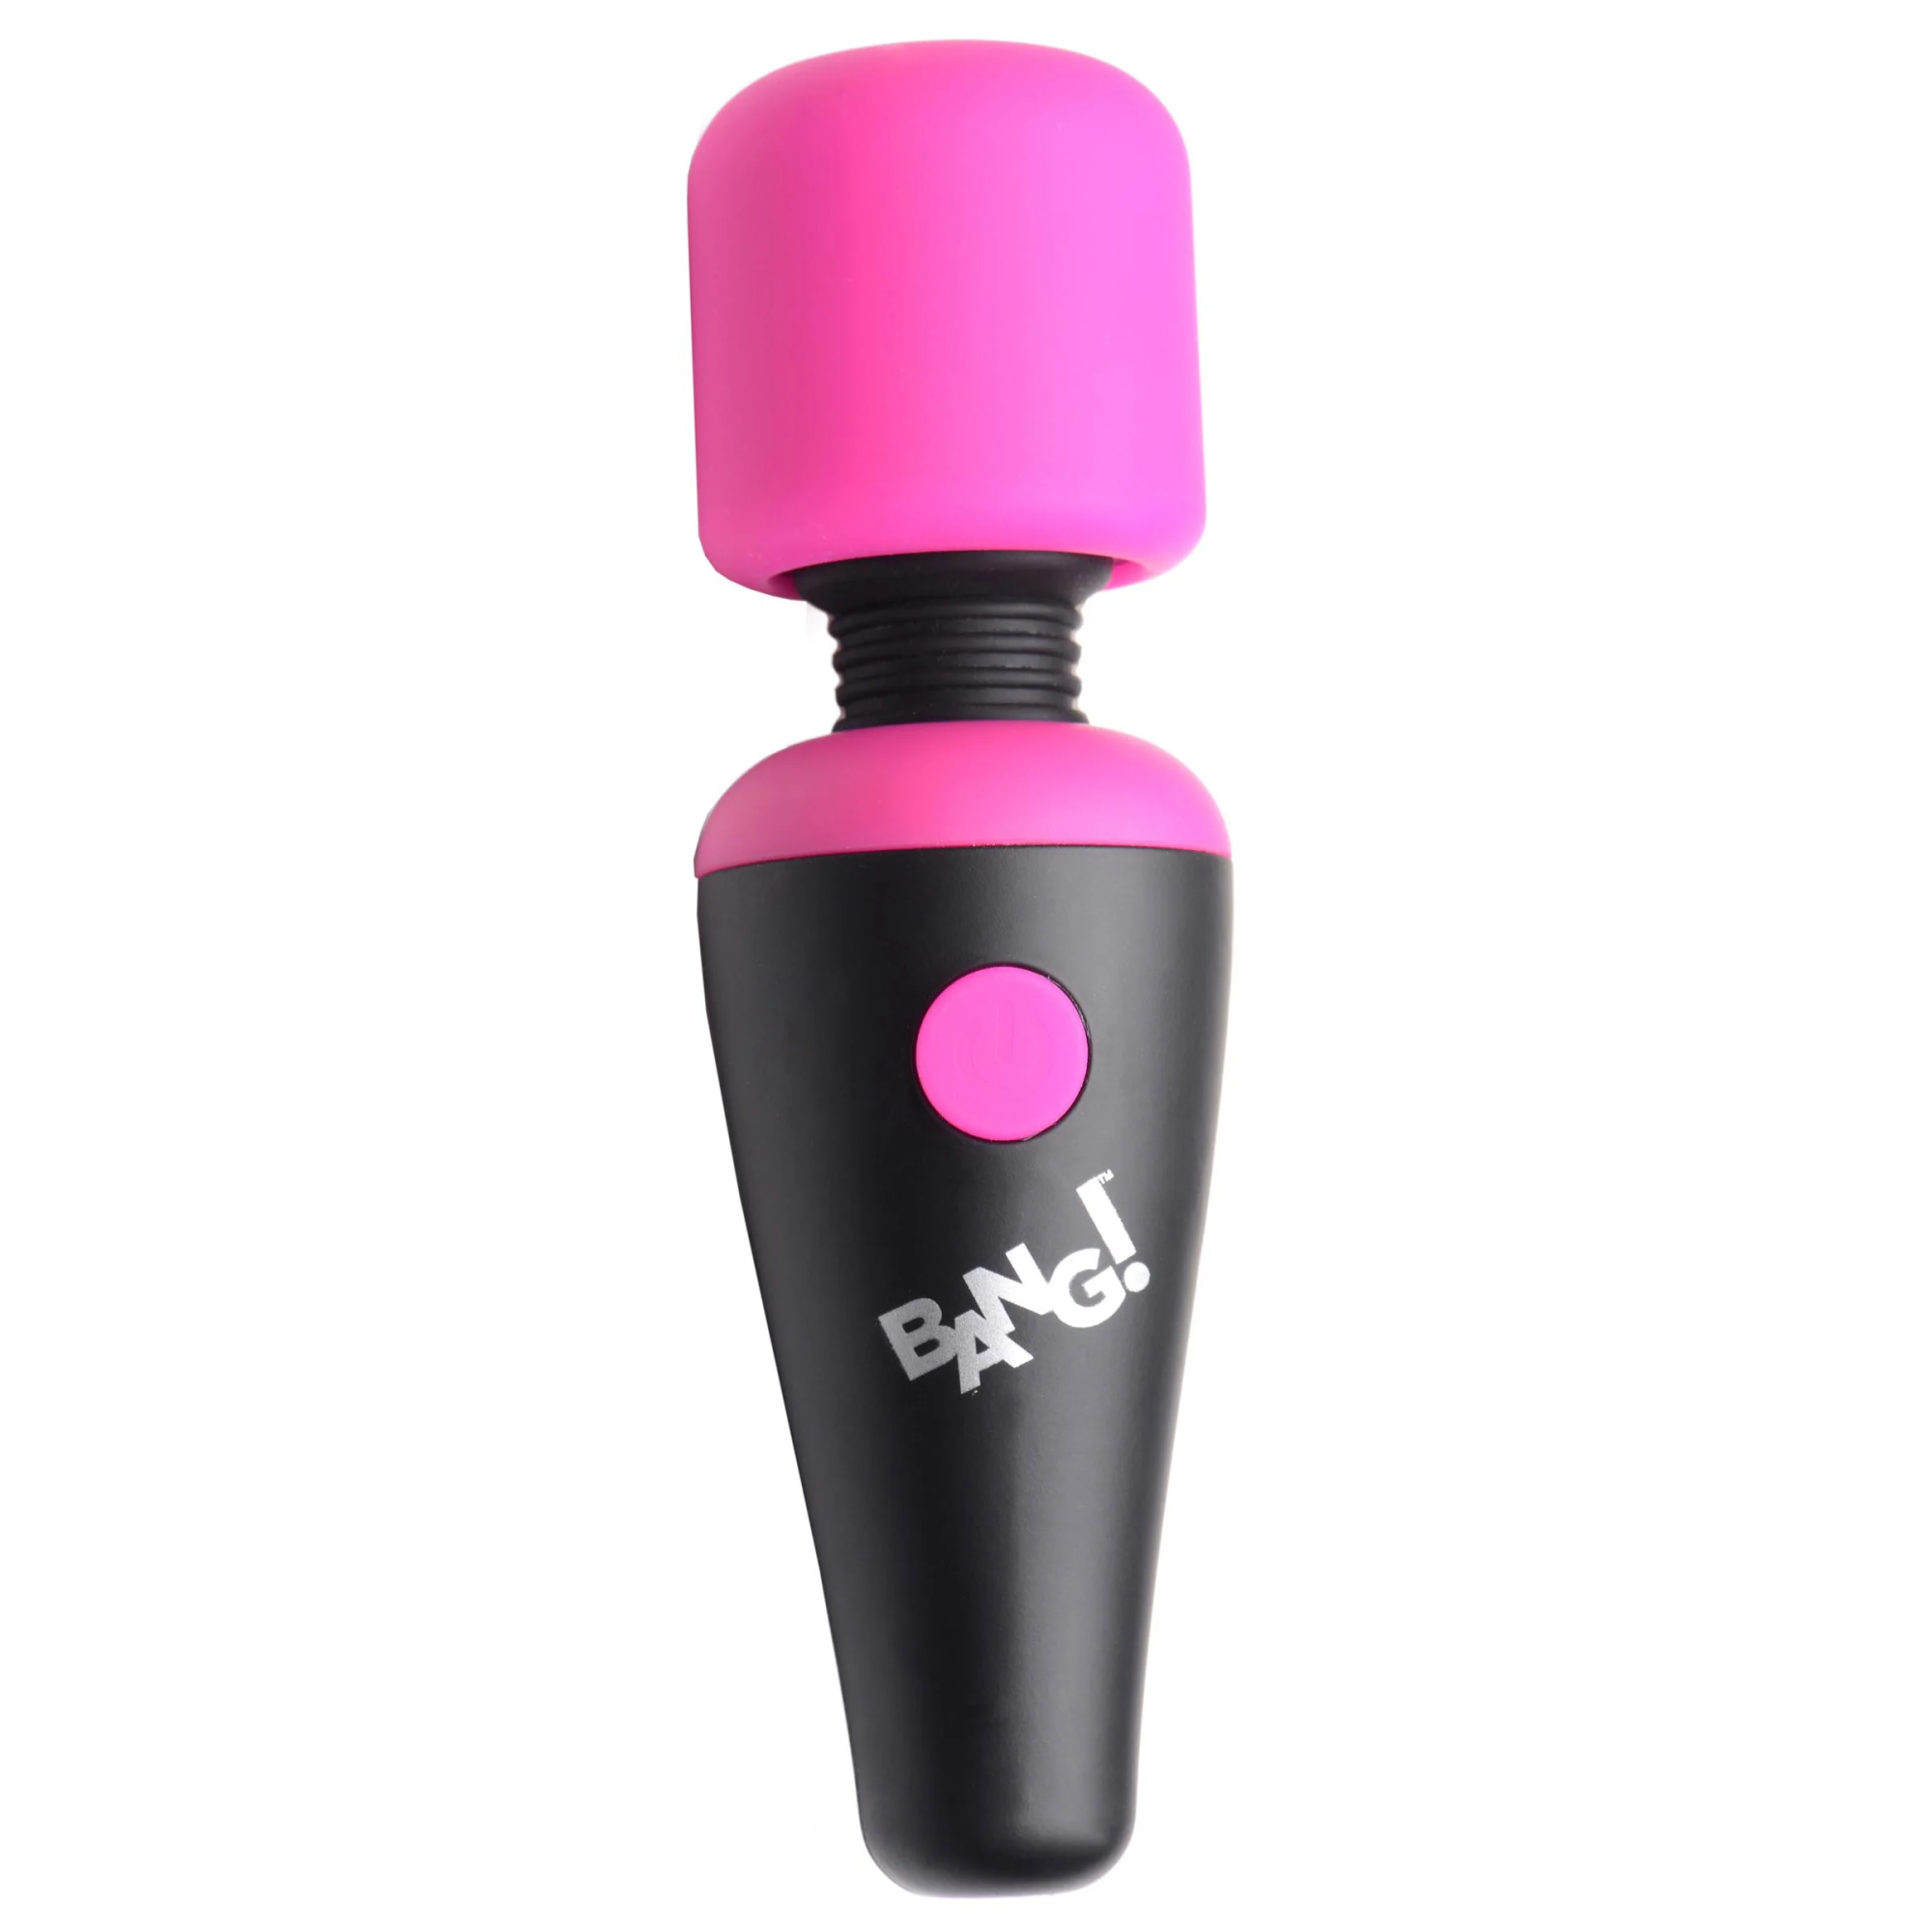 Bang! 10X Vibrating Mini Silicone Wand - мини-вибромассажер для клитора, 11х3 см (розовый)